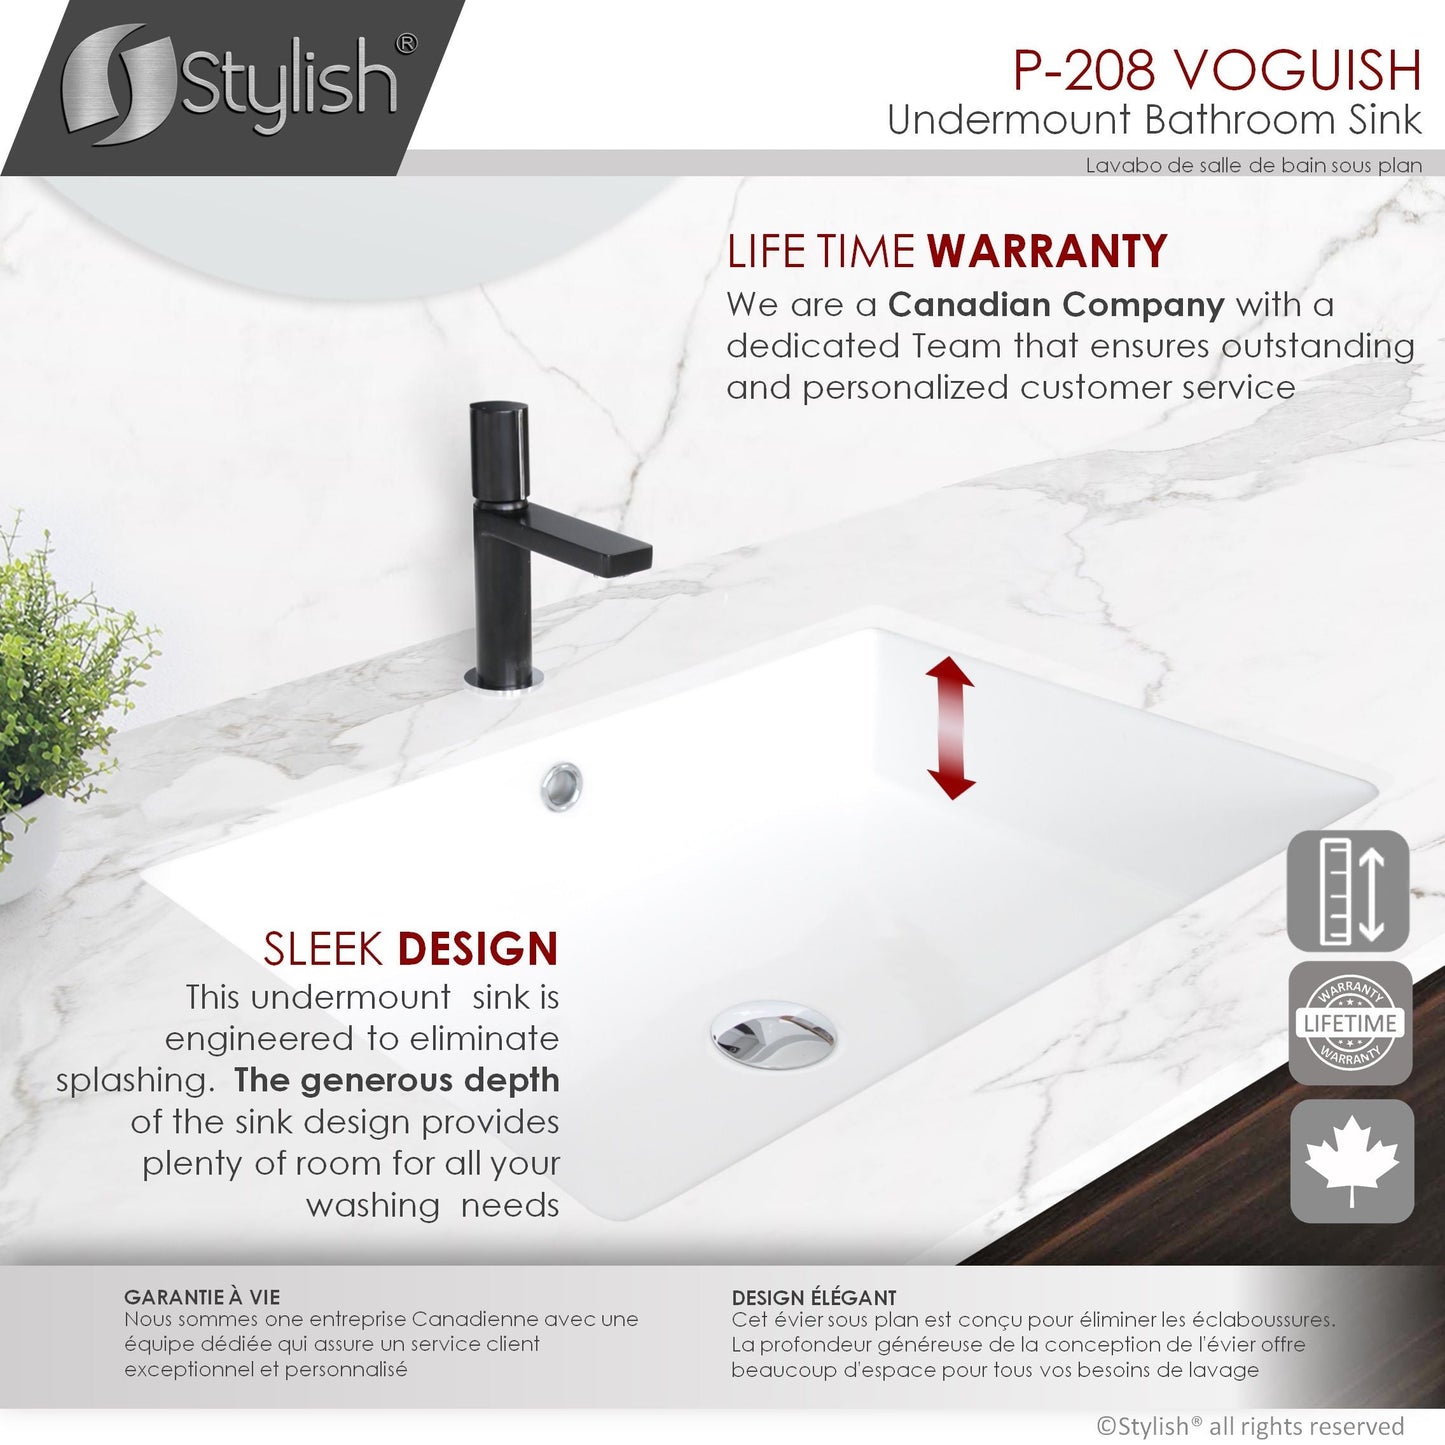 Stylish Voguish 24" x 16" Rectangular Undermount Ceramic Bathroom Sink with 2 Overflow Finishes P-208